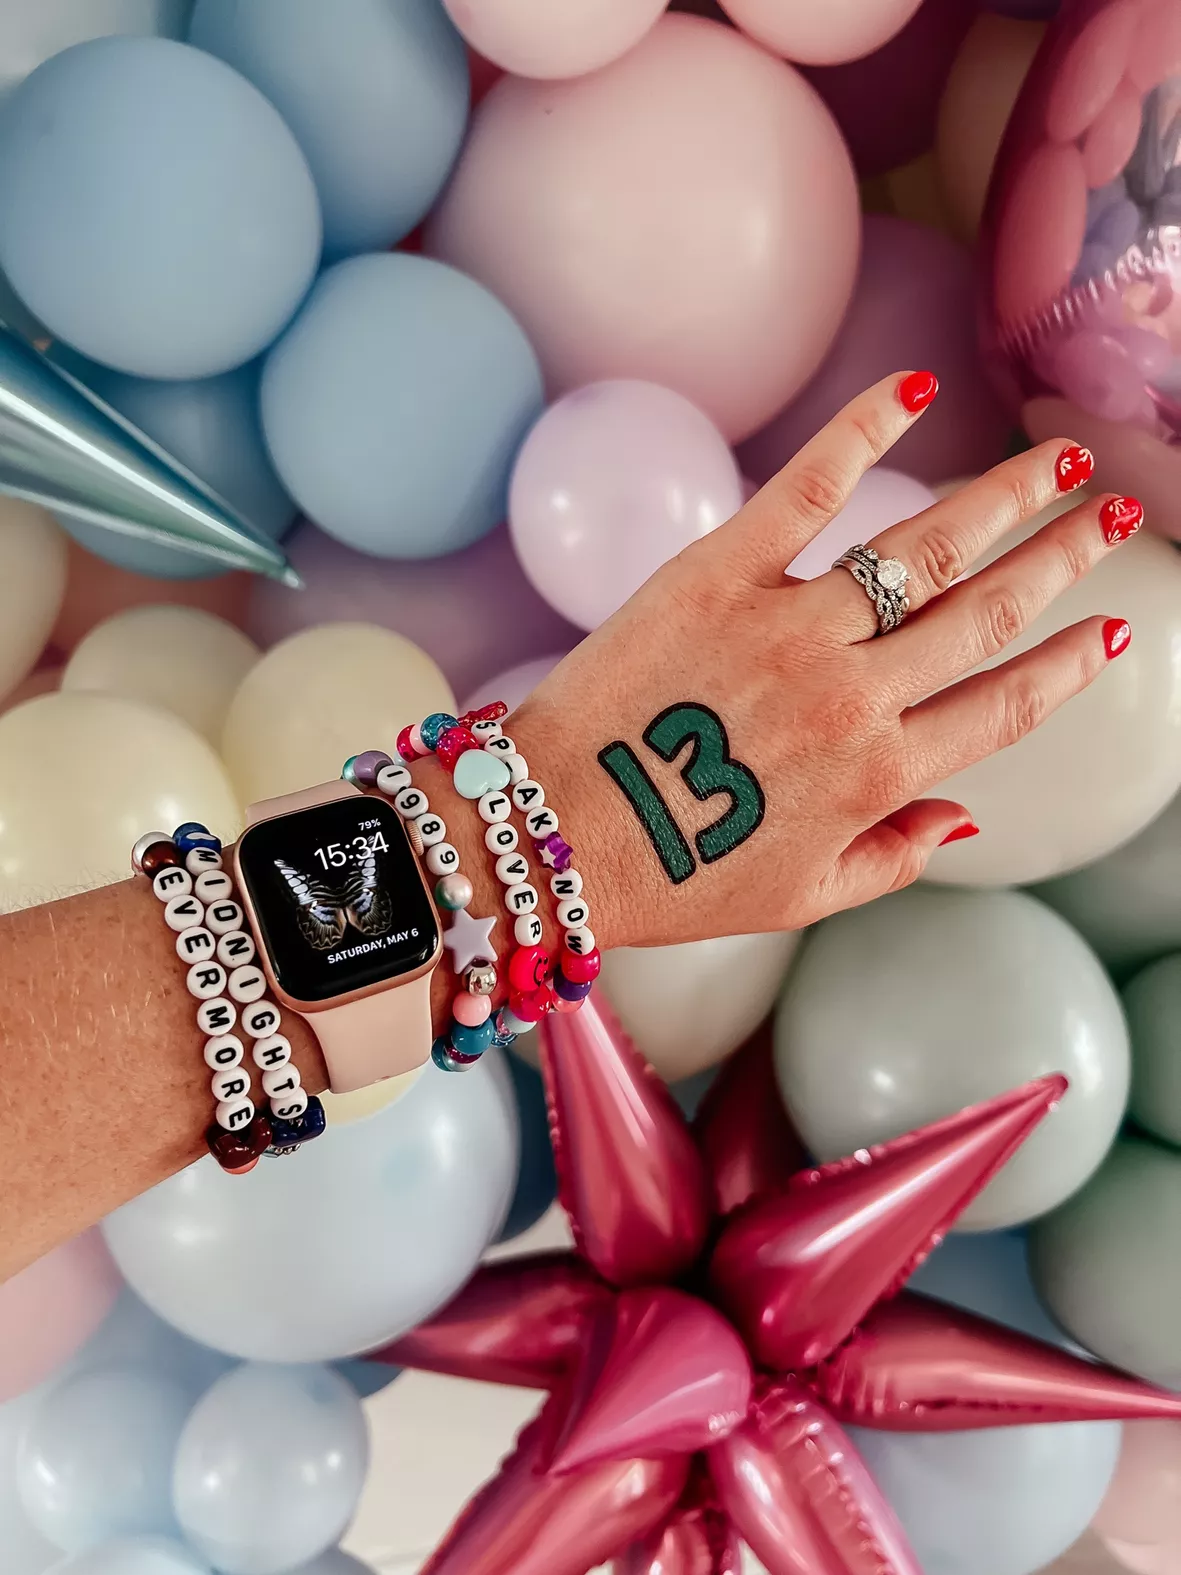 Swiftie Bangle, Taylor Swift friendship bracelet charms